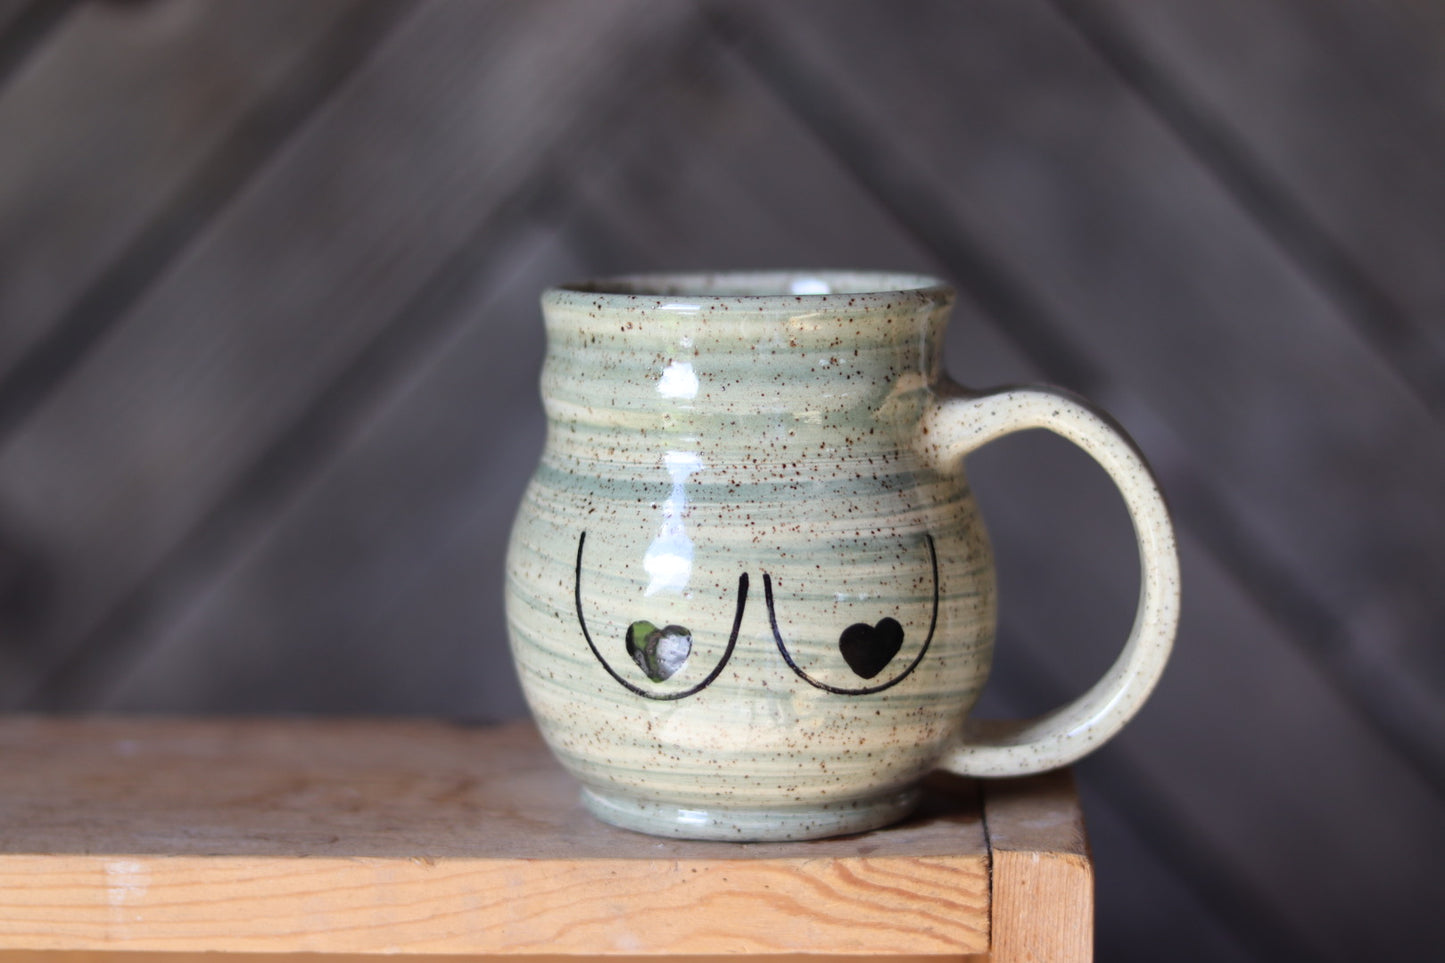 Boob Mug “But first coffee…” 16 oz.